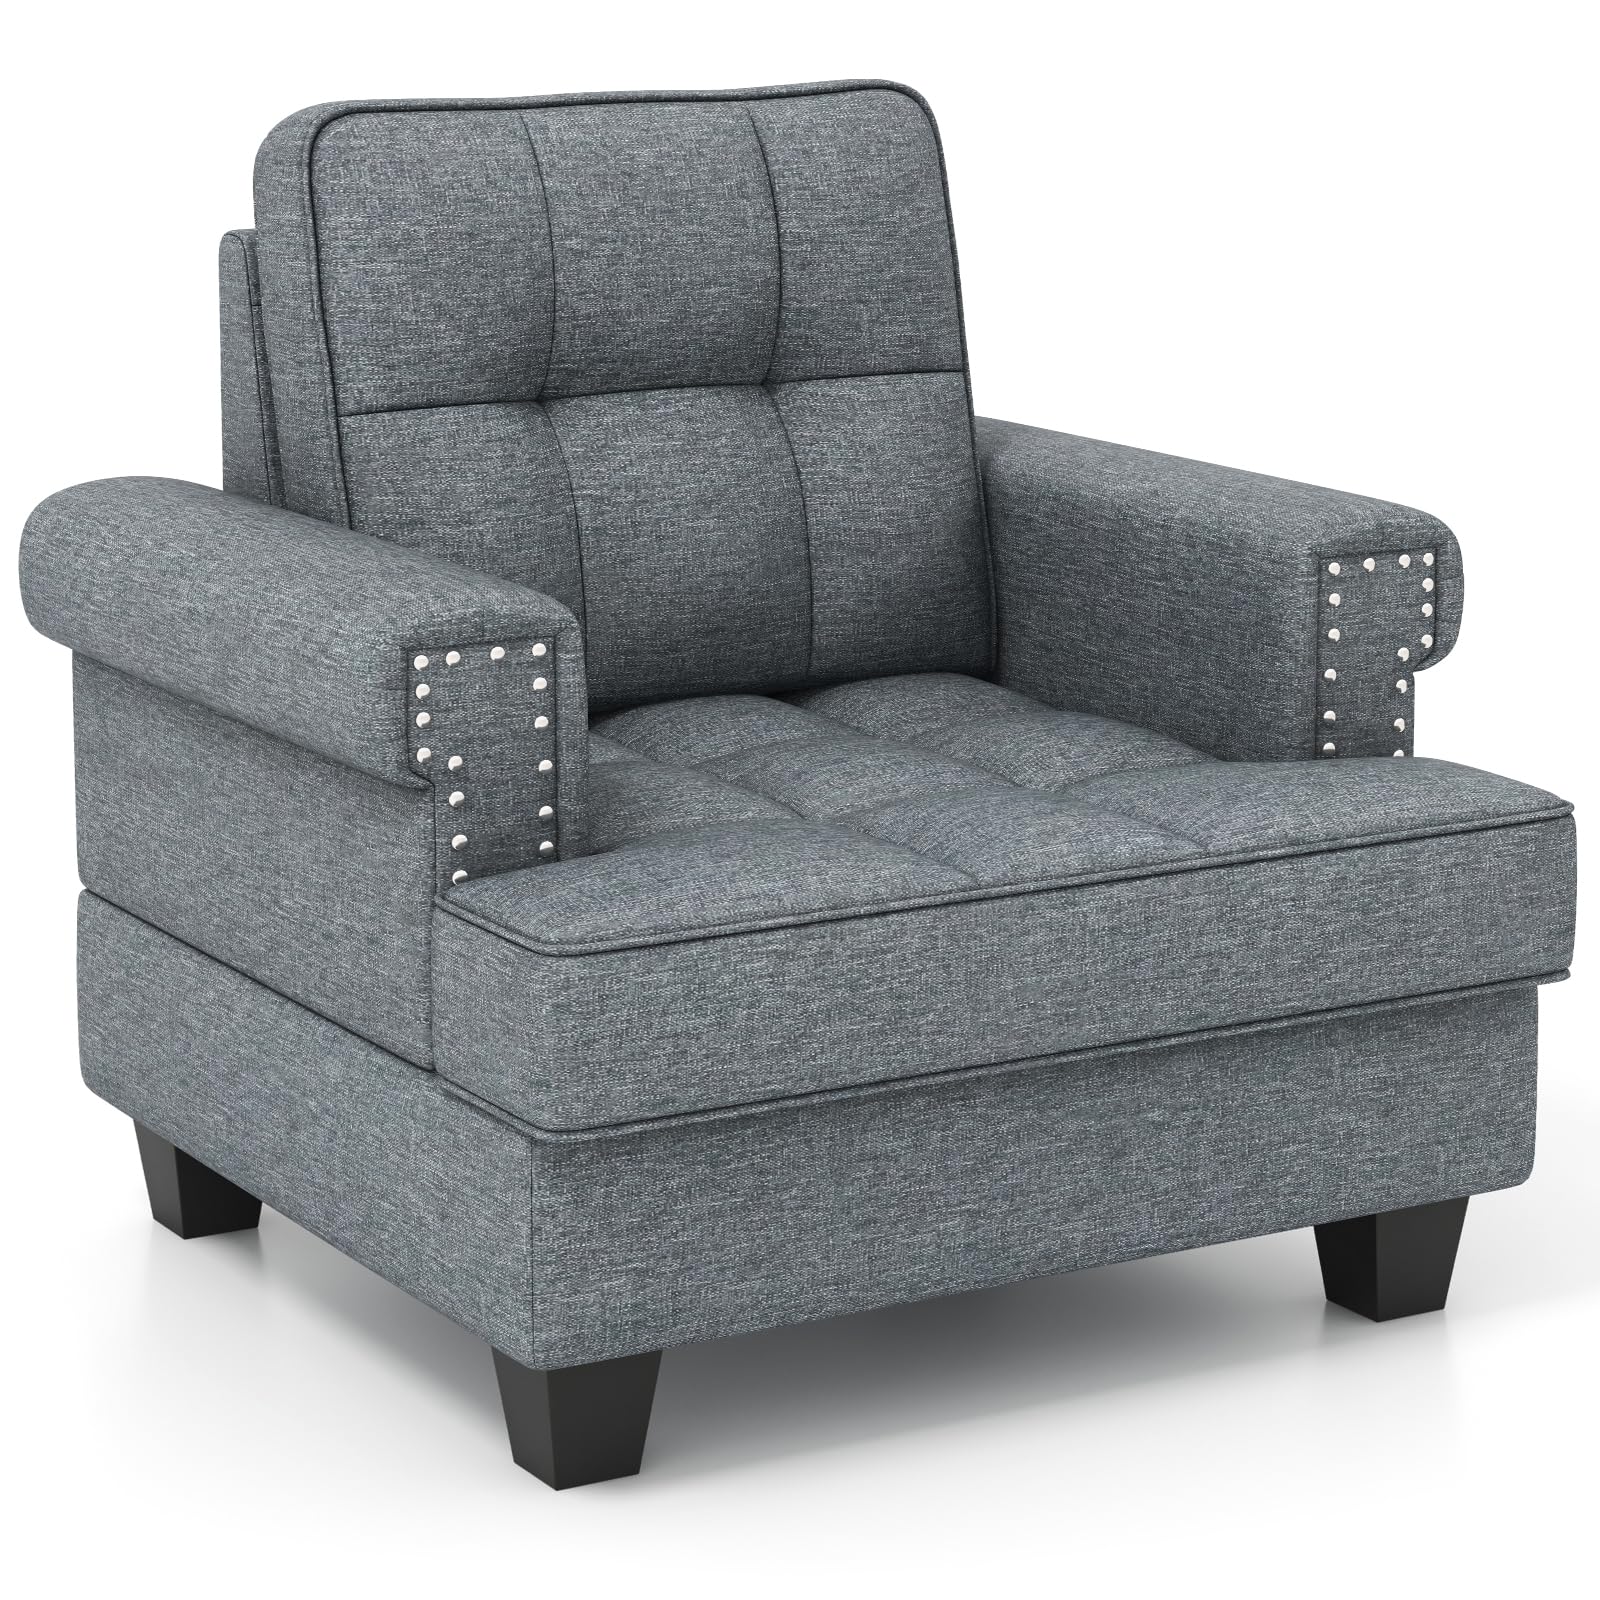 Giantex Mid Century Modern Accent Chair